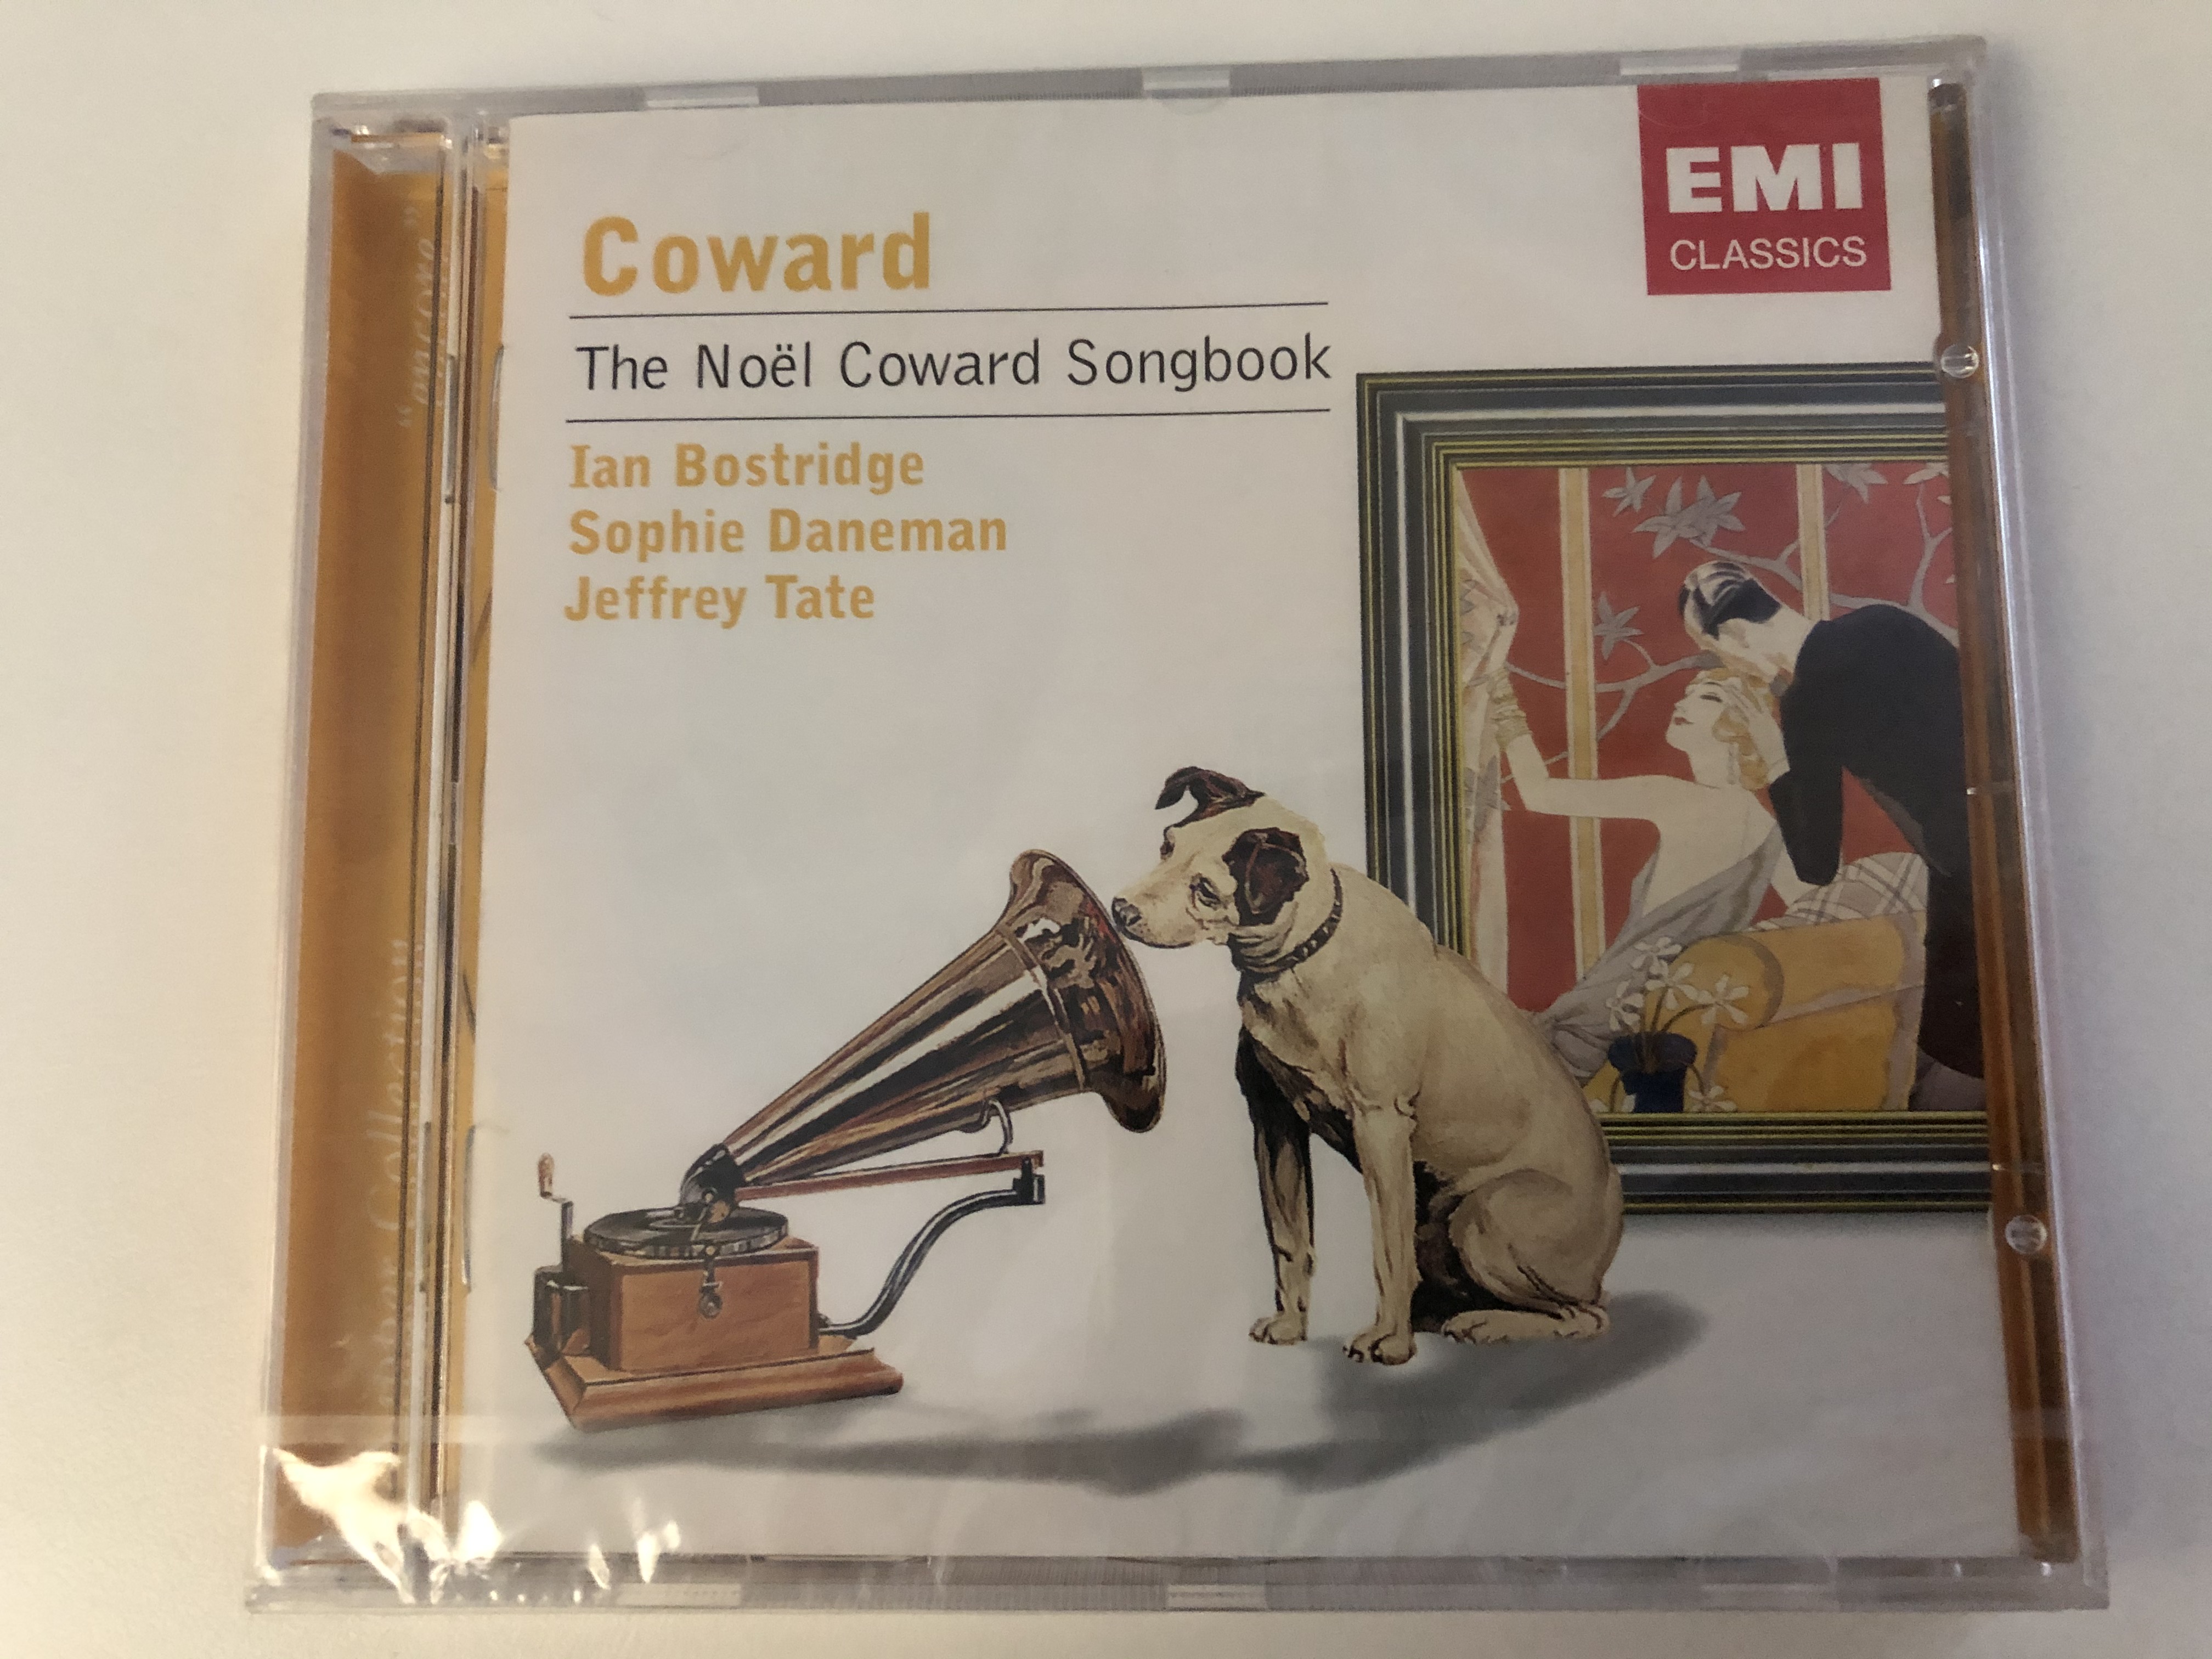 coward-the-noel-coward-songbook-ian-bostridge-sophie-daneman-jeffrey-tate-emi-classics-audio-cd-2008-5099950902026-1-.jpg